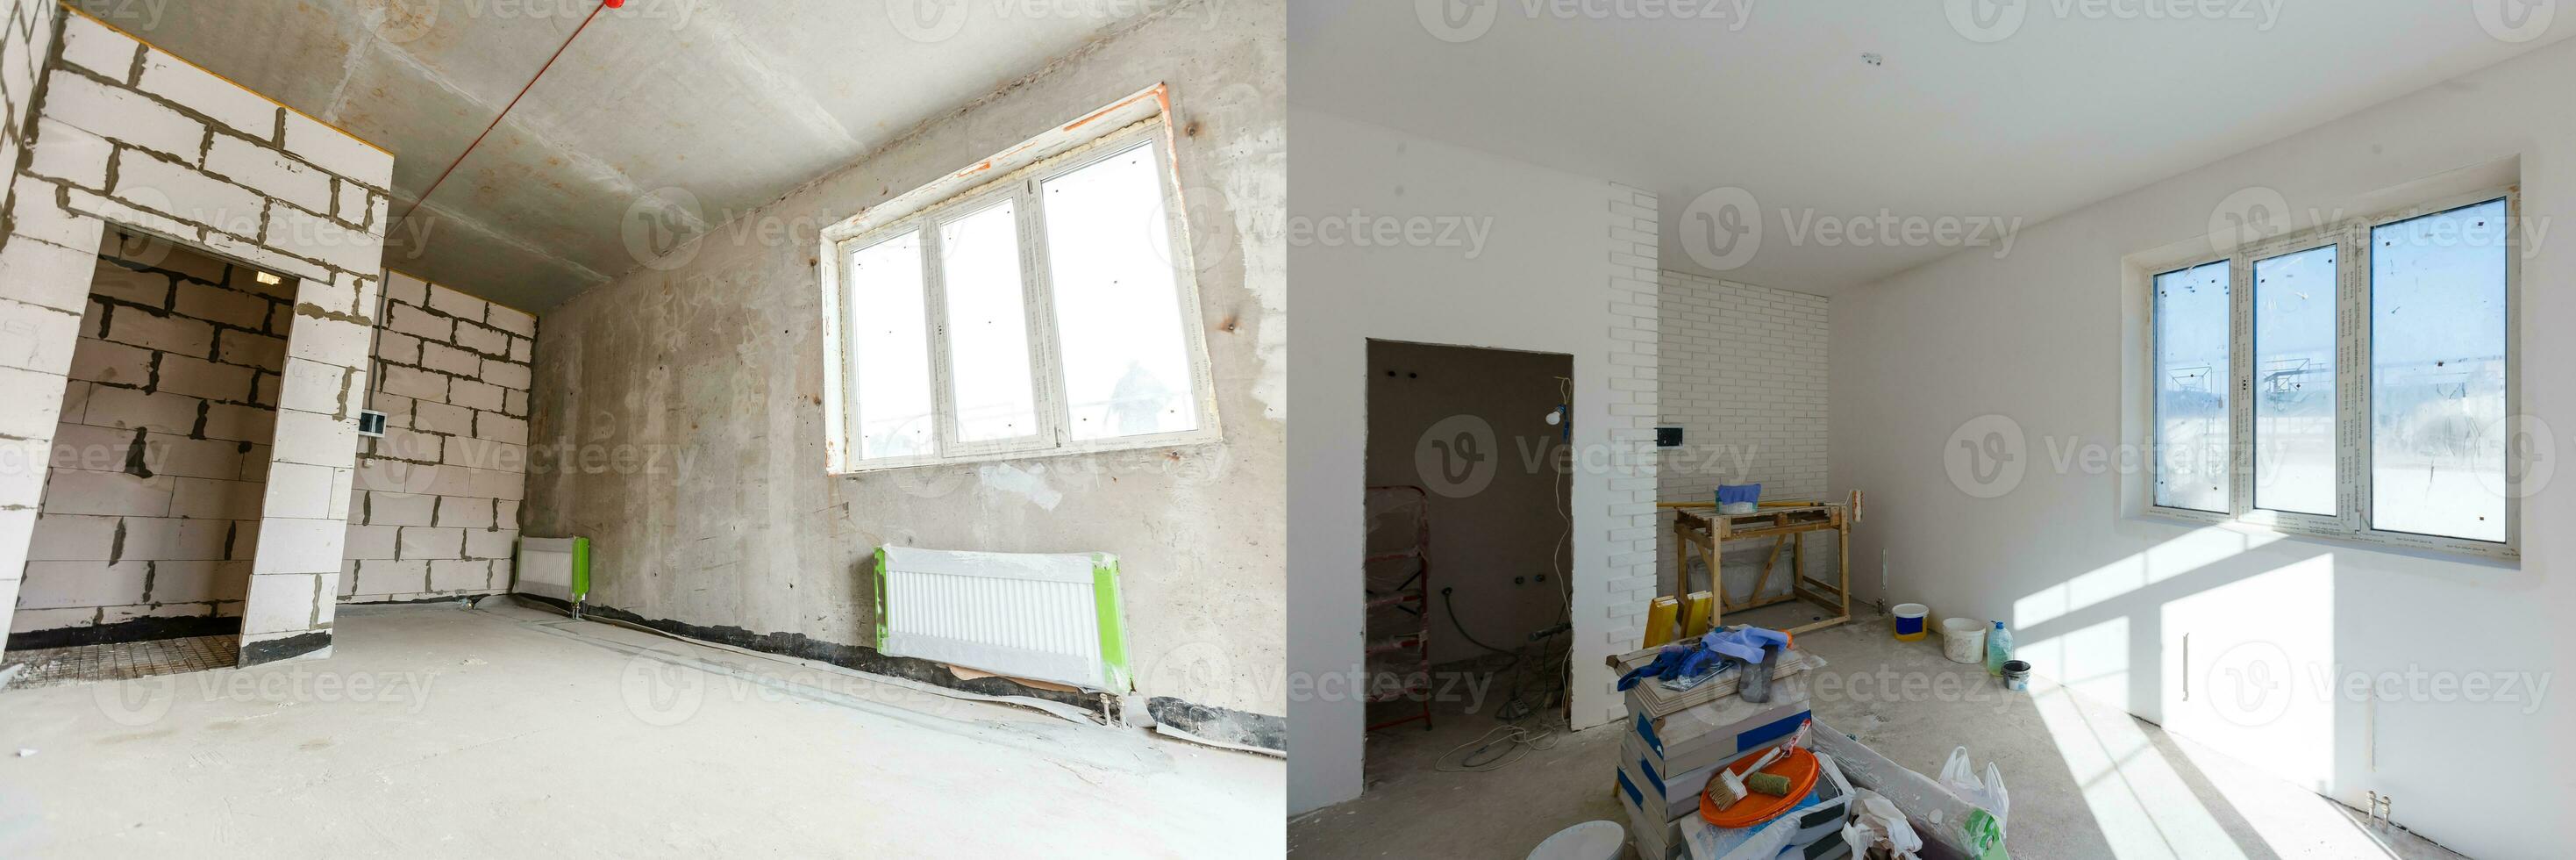 home renovation, empty room before refurbishment or restoration photo